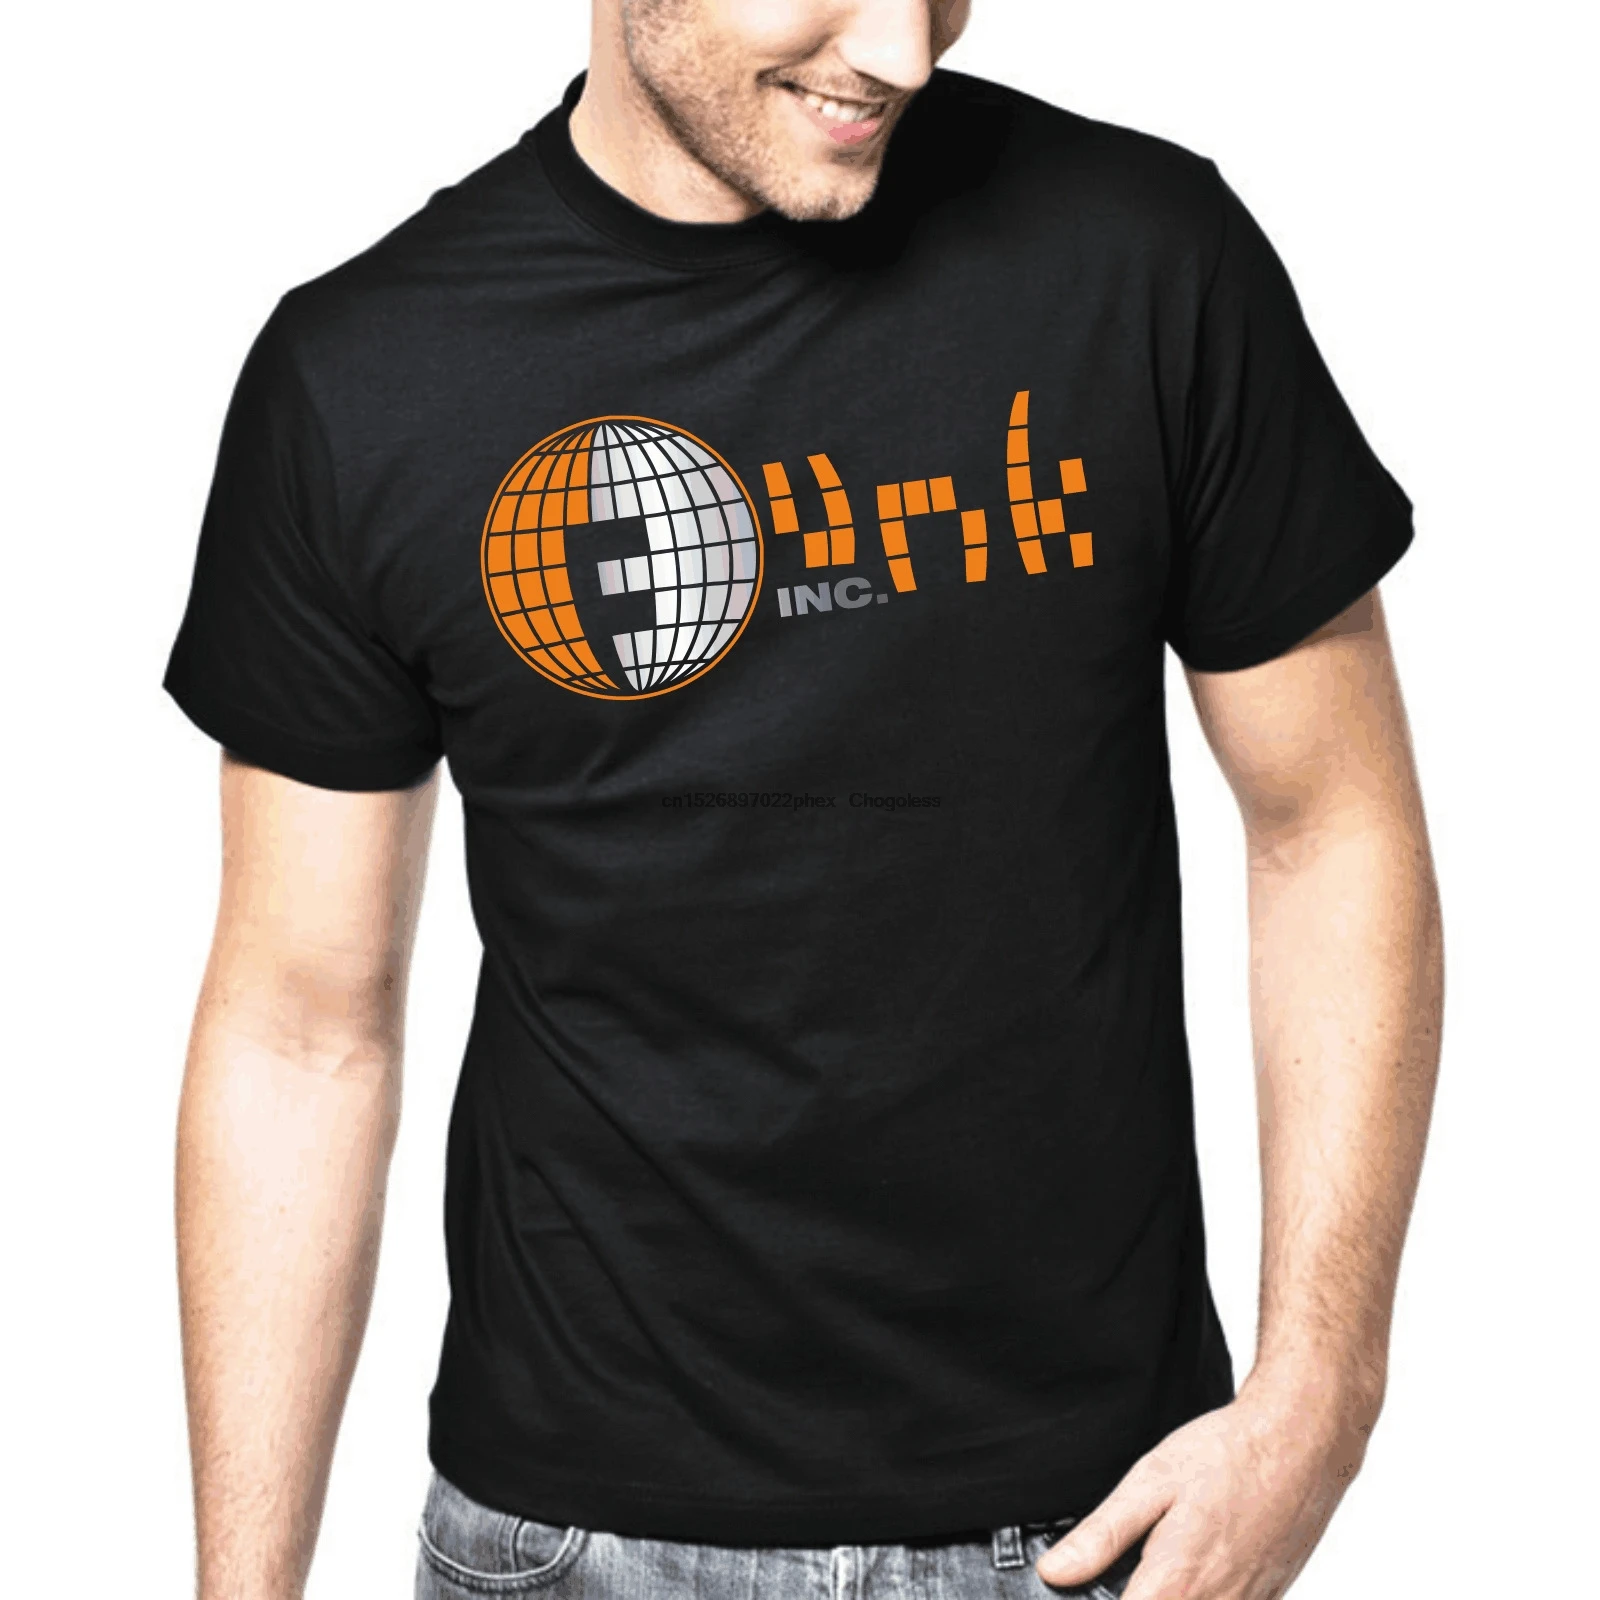 Funk Inc Music House Groovy DJ Radio Funky Music Groove camiseta  electrónica|Camisetas| - AliExpress